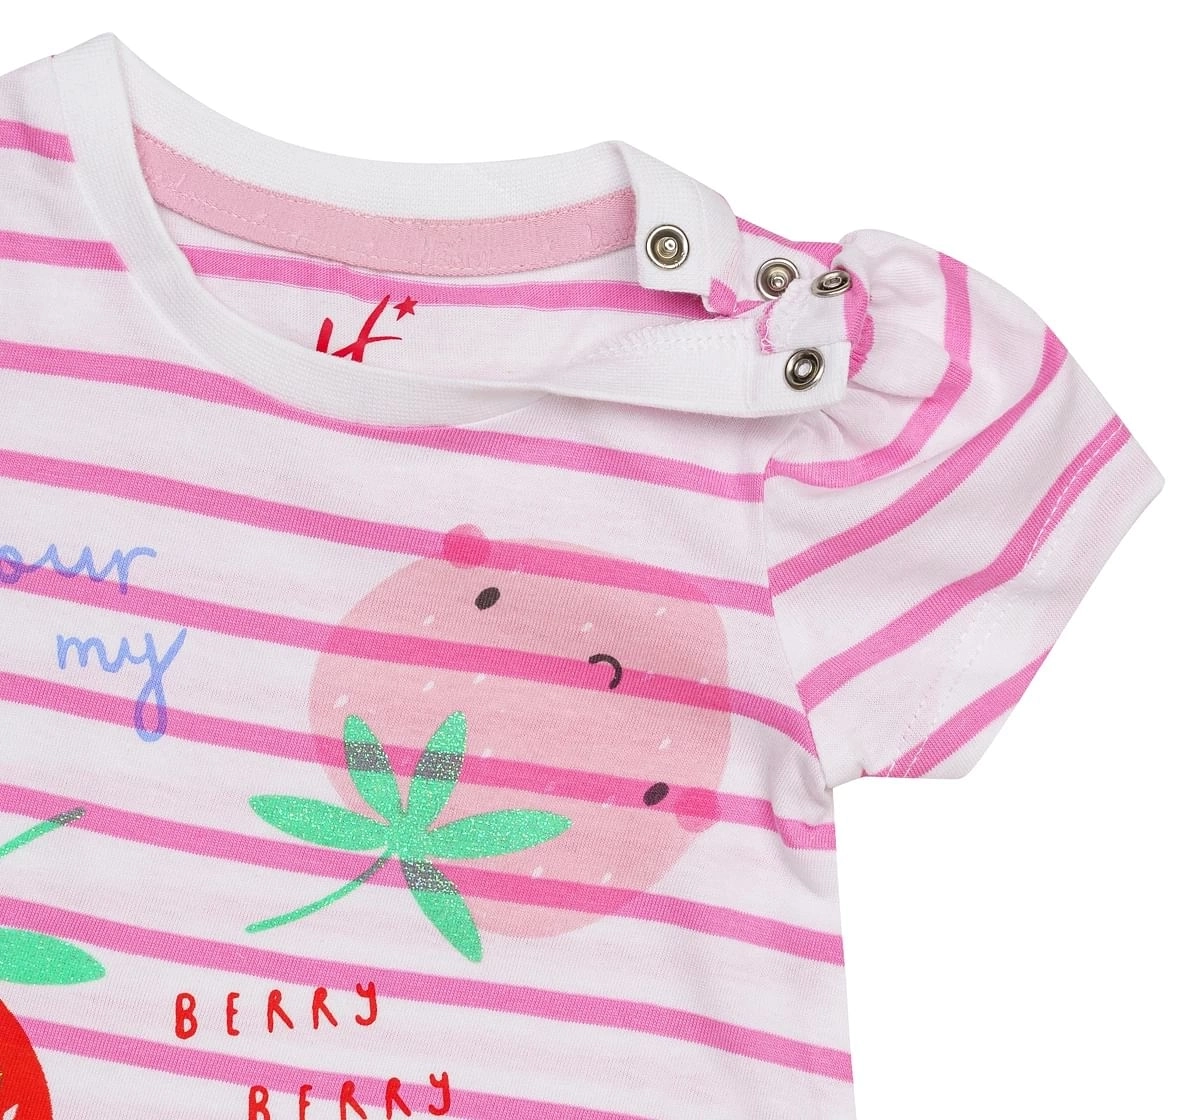 H by Hamleys Girls Short Sleeves Top Strawberry Print-Multicolor